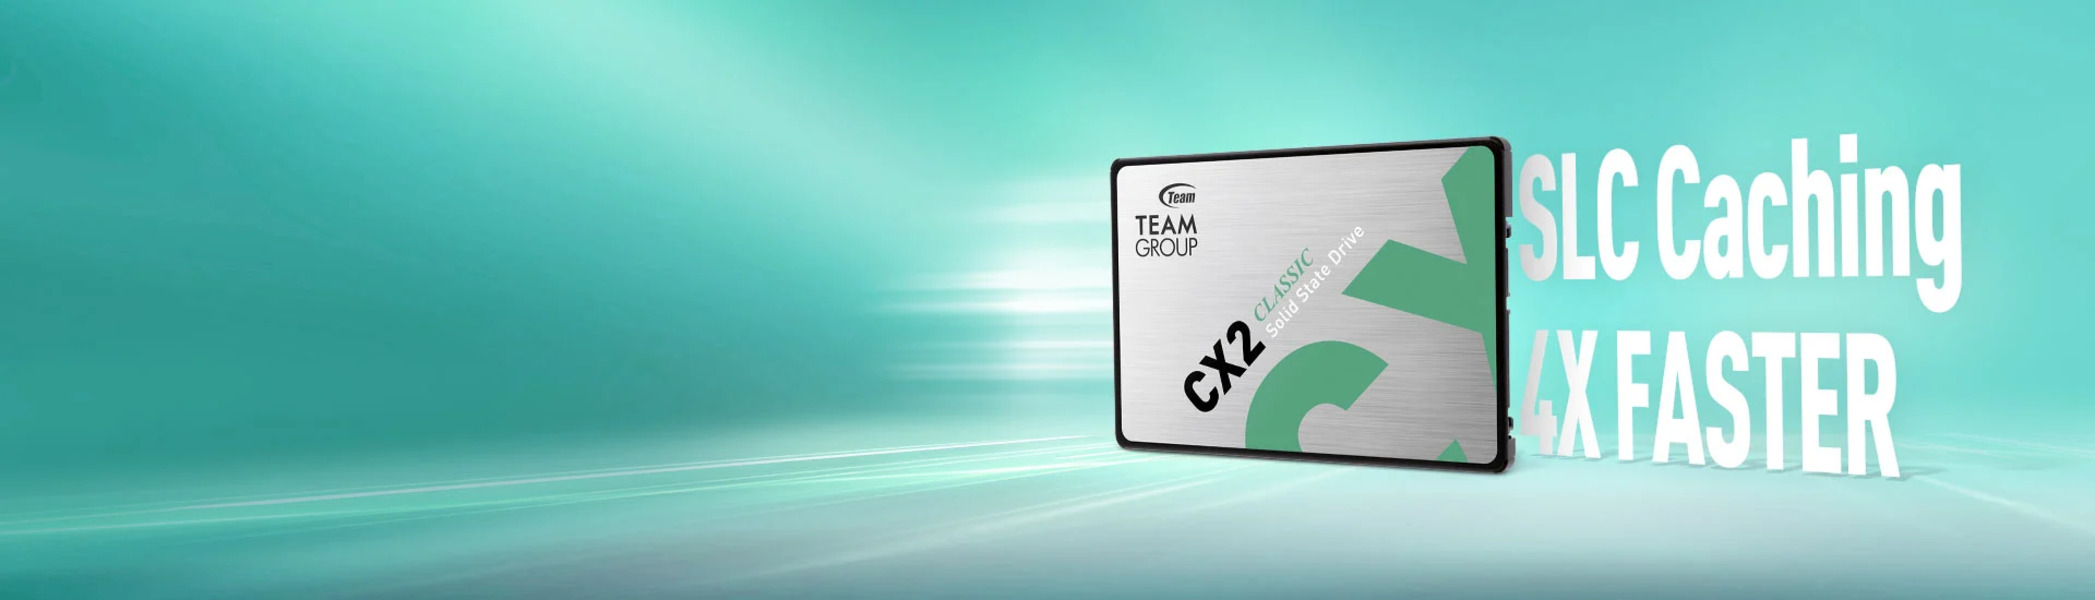 Ổ Cứng SSD TeamGroup CX2 256GB 2.5 inch SATA III